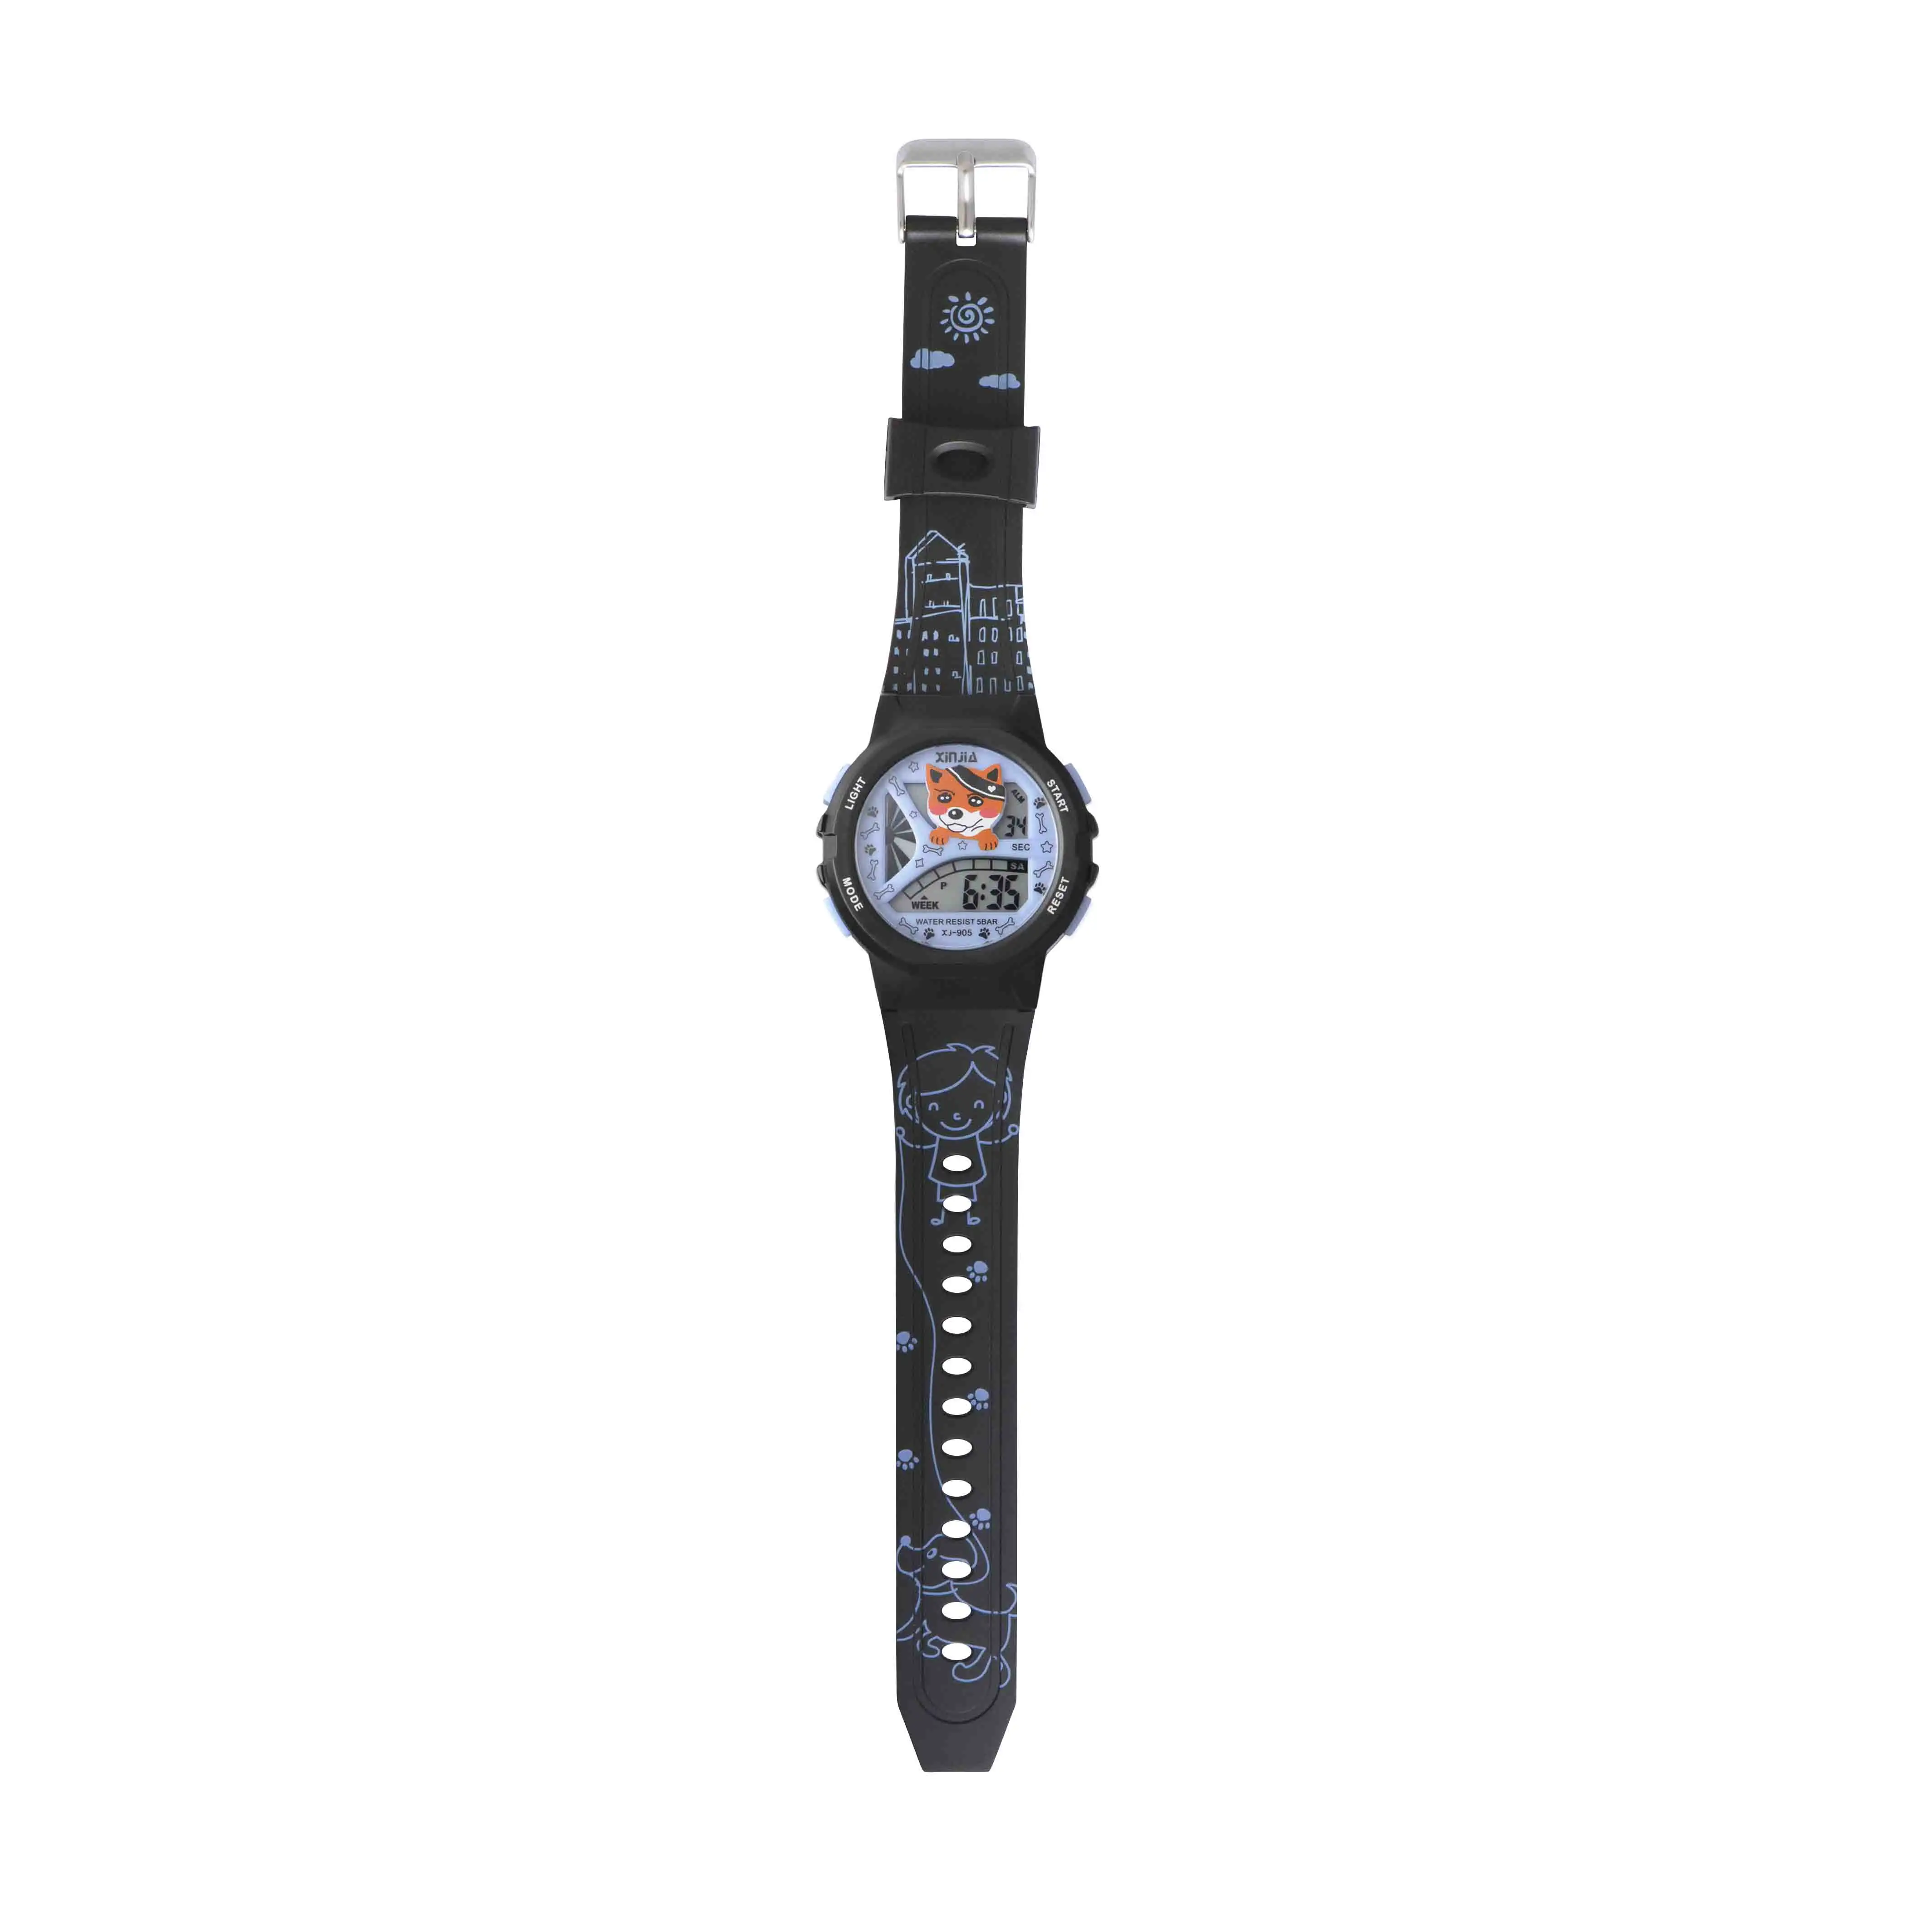 Xinjia oem के निविड़ अंधकार खेल छात्रों घड़ी डिजिटल wristwatches अलार्म orologi स्टेनलेस स्टील कार्टून मुद्रण